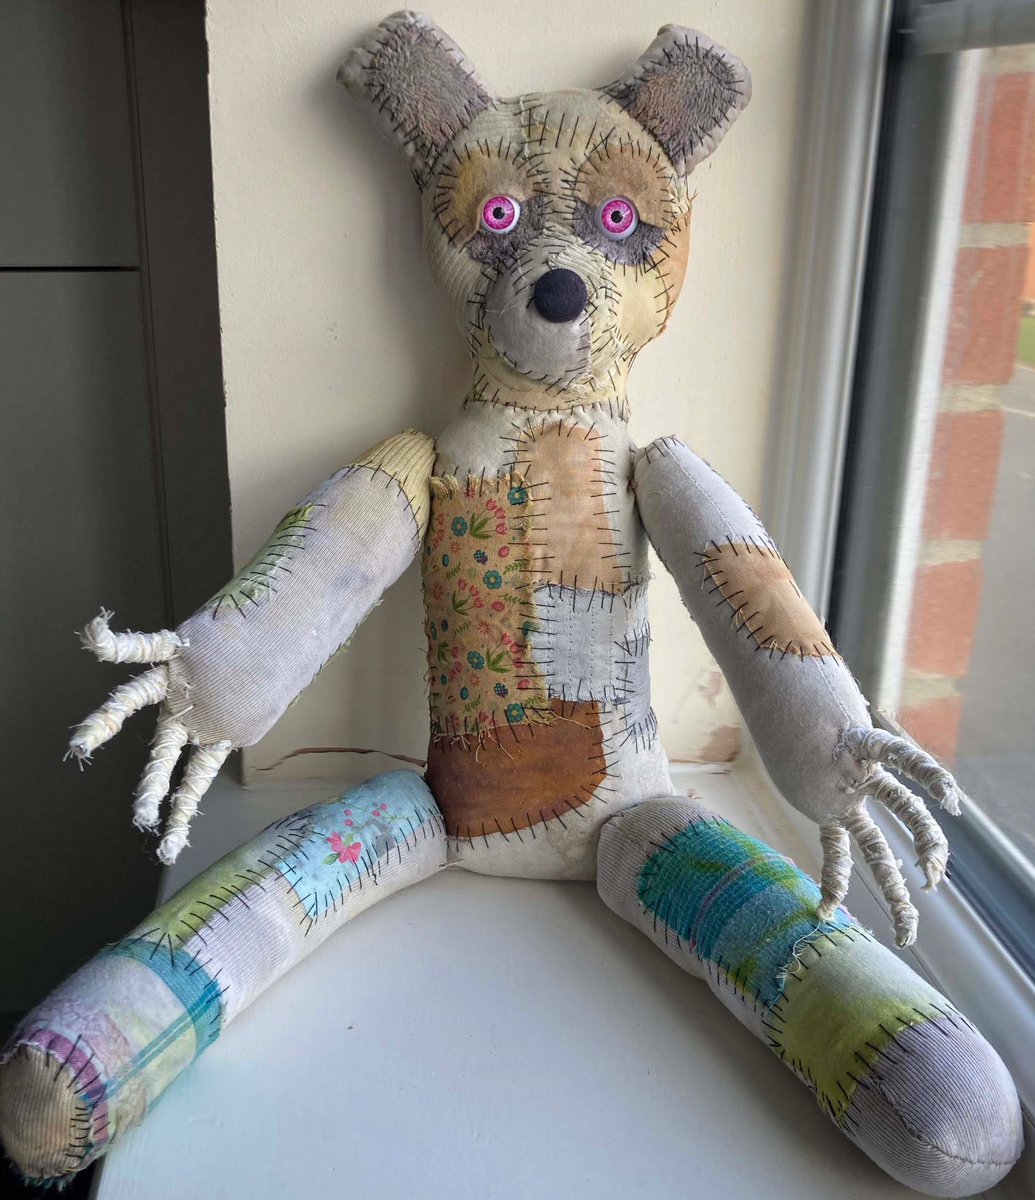 ‘Huggle’, the bear 🐻

.. 

#teddybear #handmadedoll #handstitchedart #textilesculpture #textileart #naturaldyefabric #folkart #patchworkdoll #stuffeddoll